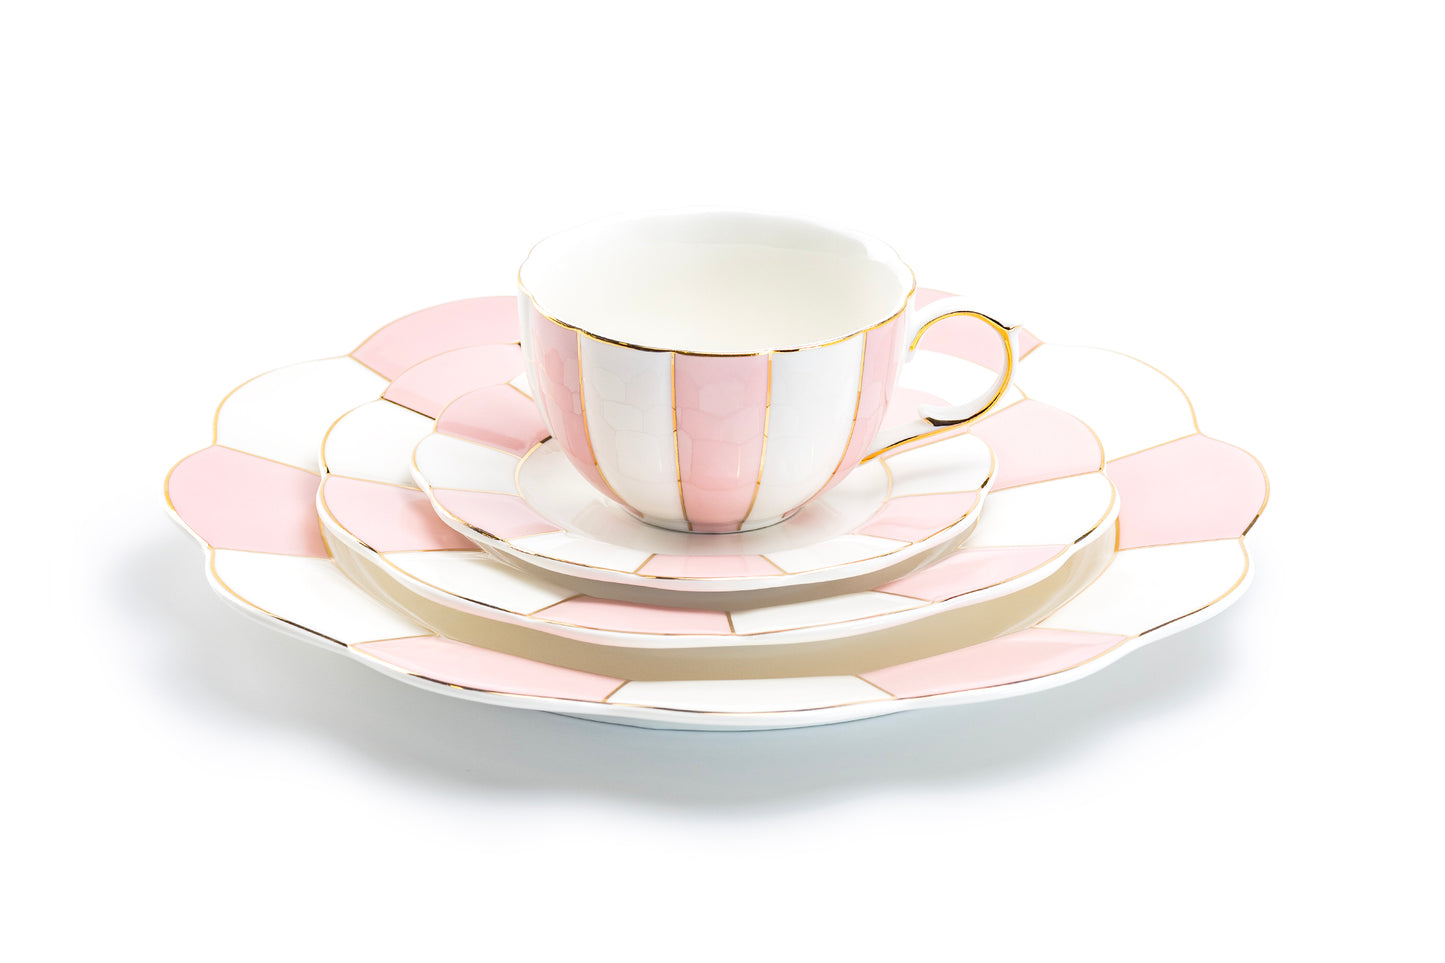 Pink Gold Scallop Fine Porcelain Dessert / Dinner Plate